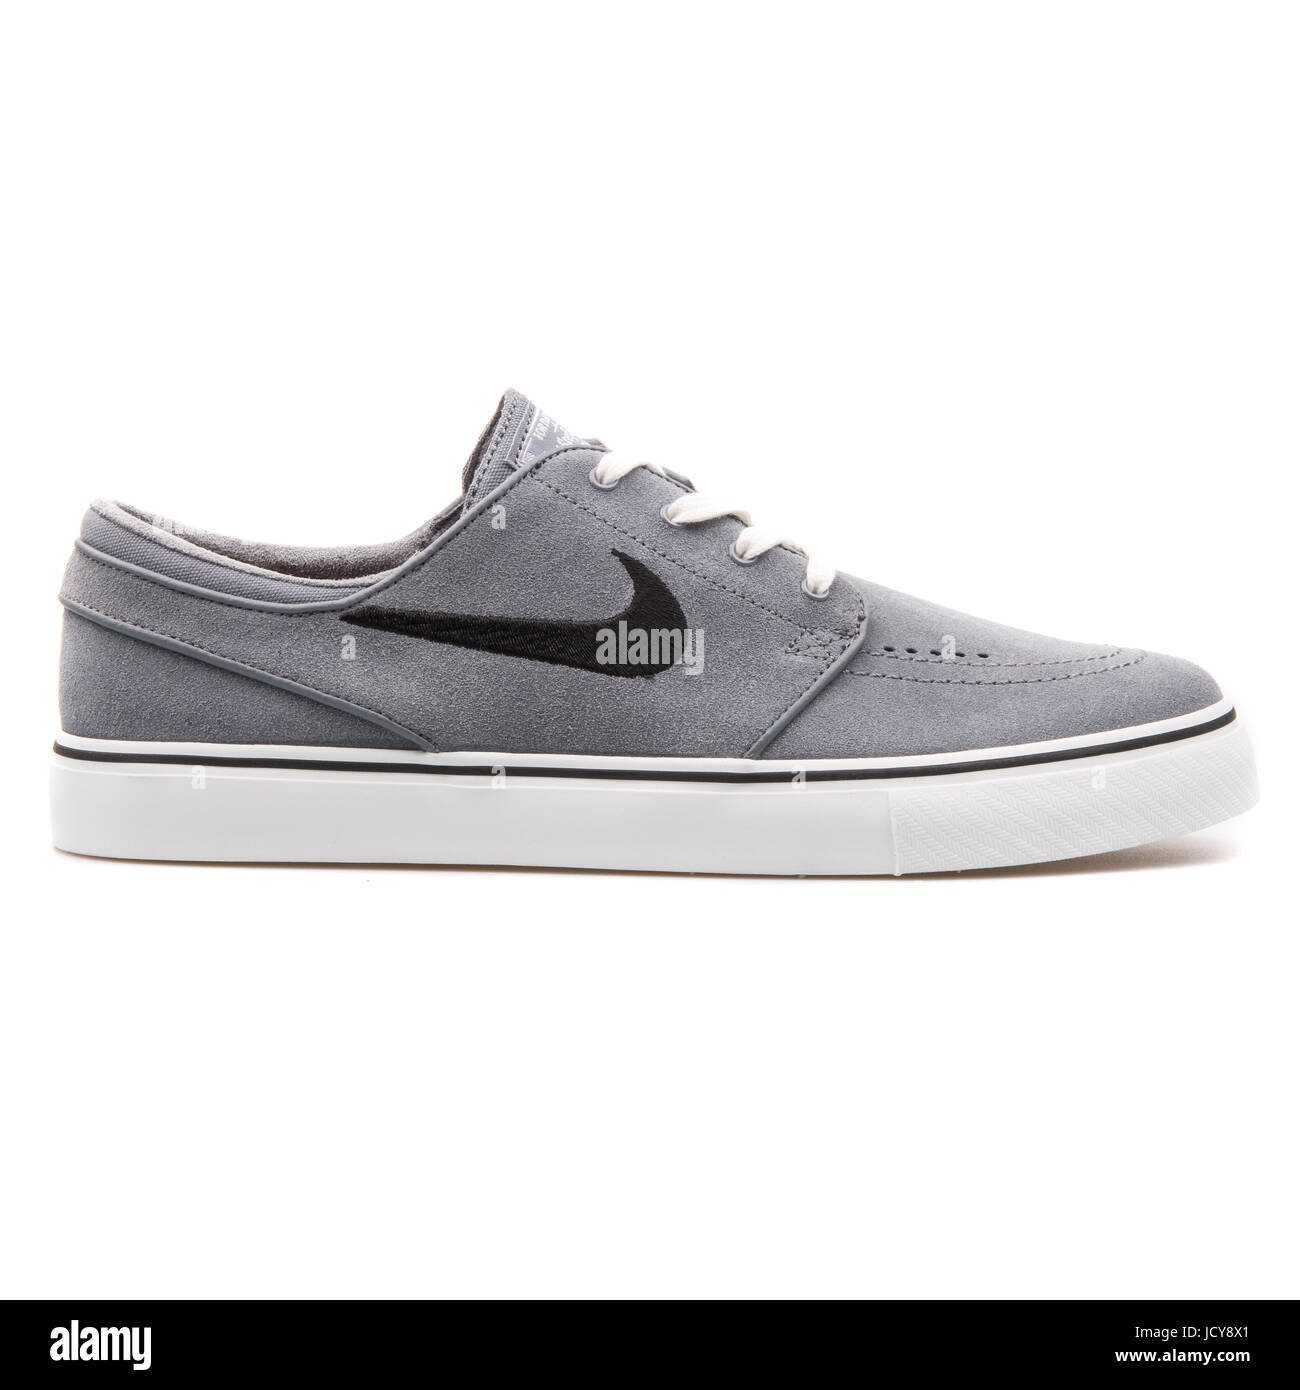 Nike Zoom Stefan Janoski Cool Grey and White Men's Skateboarding Shoes -  333824-045 Stock Photo - Alamy